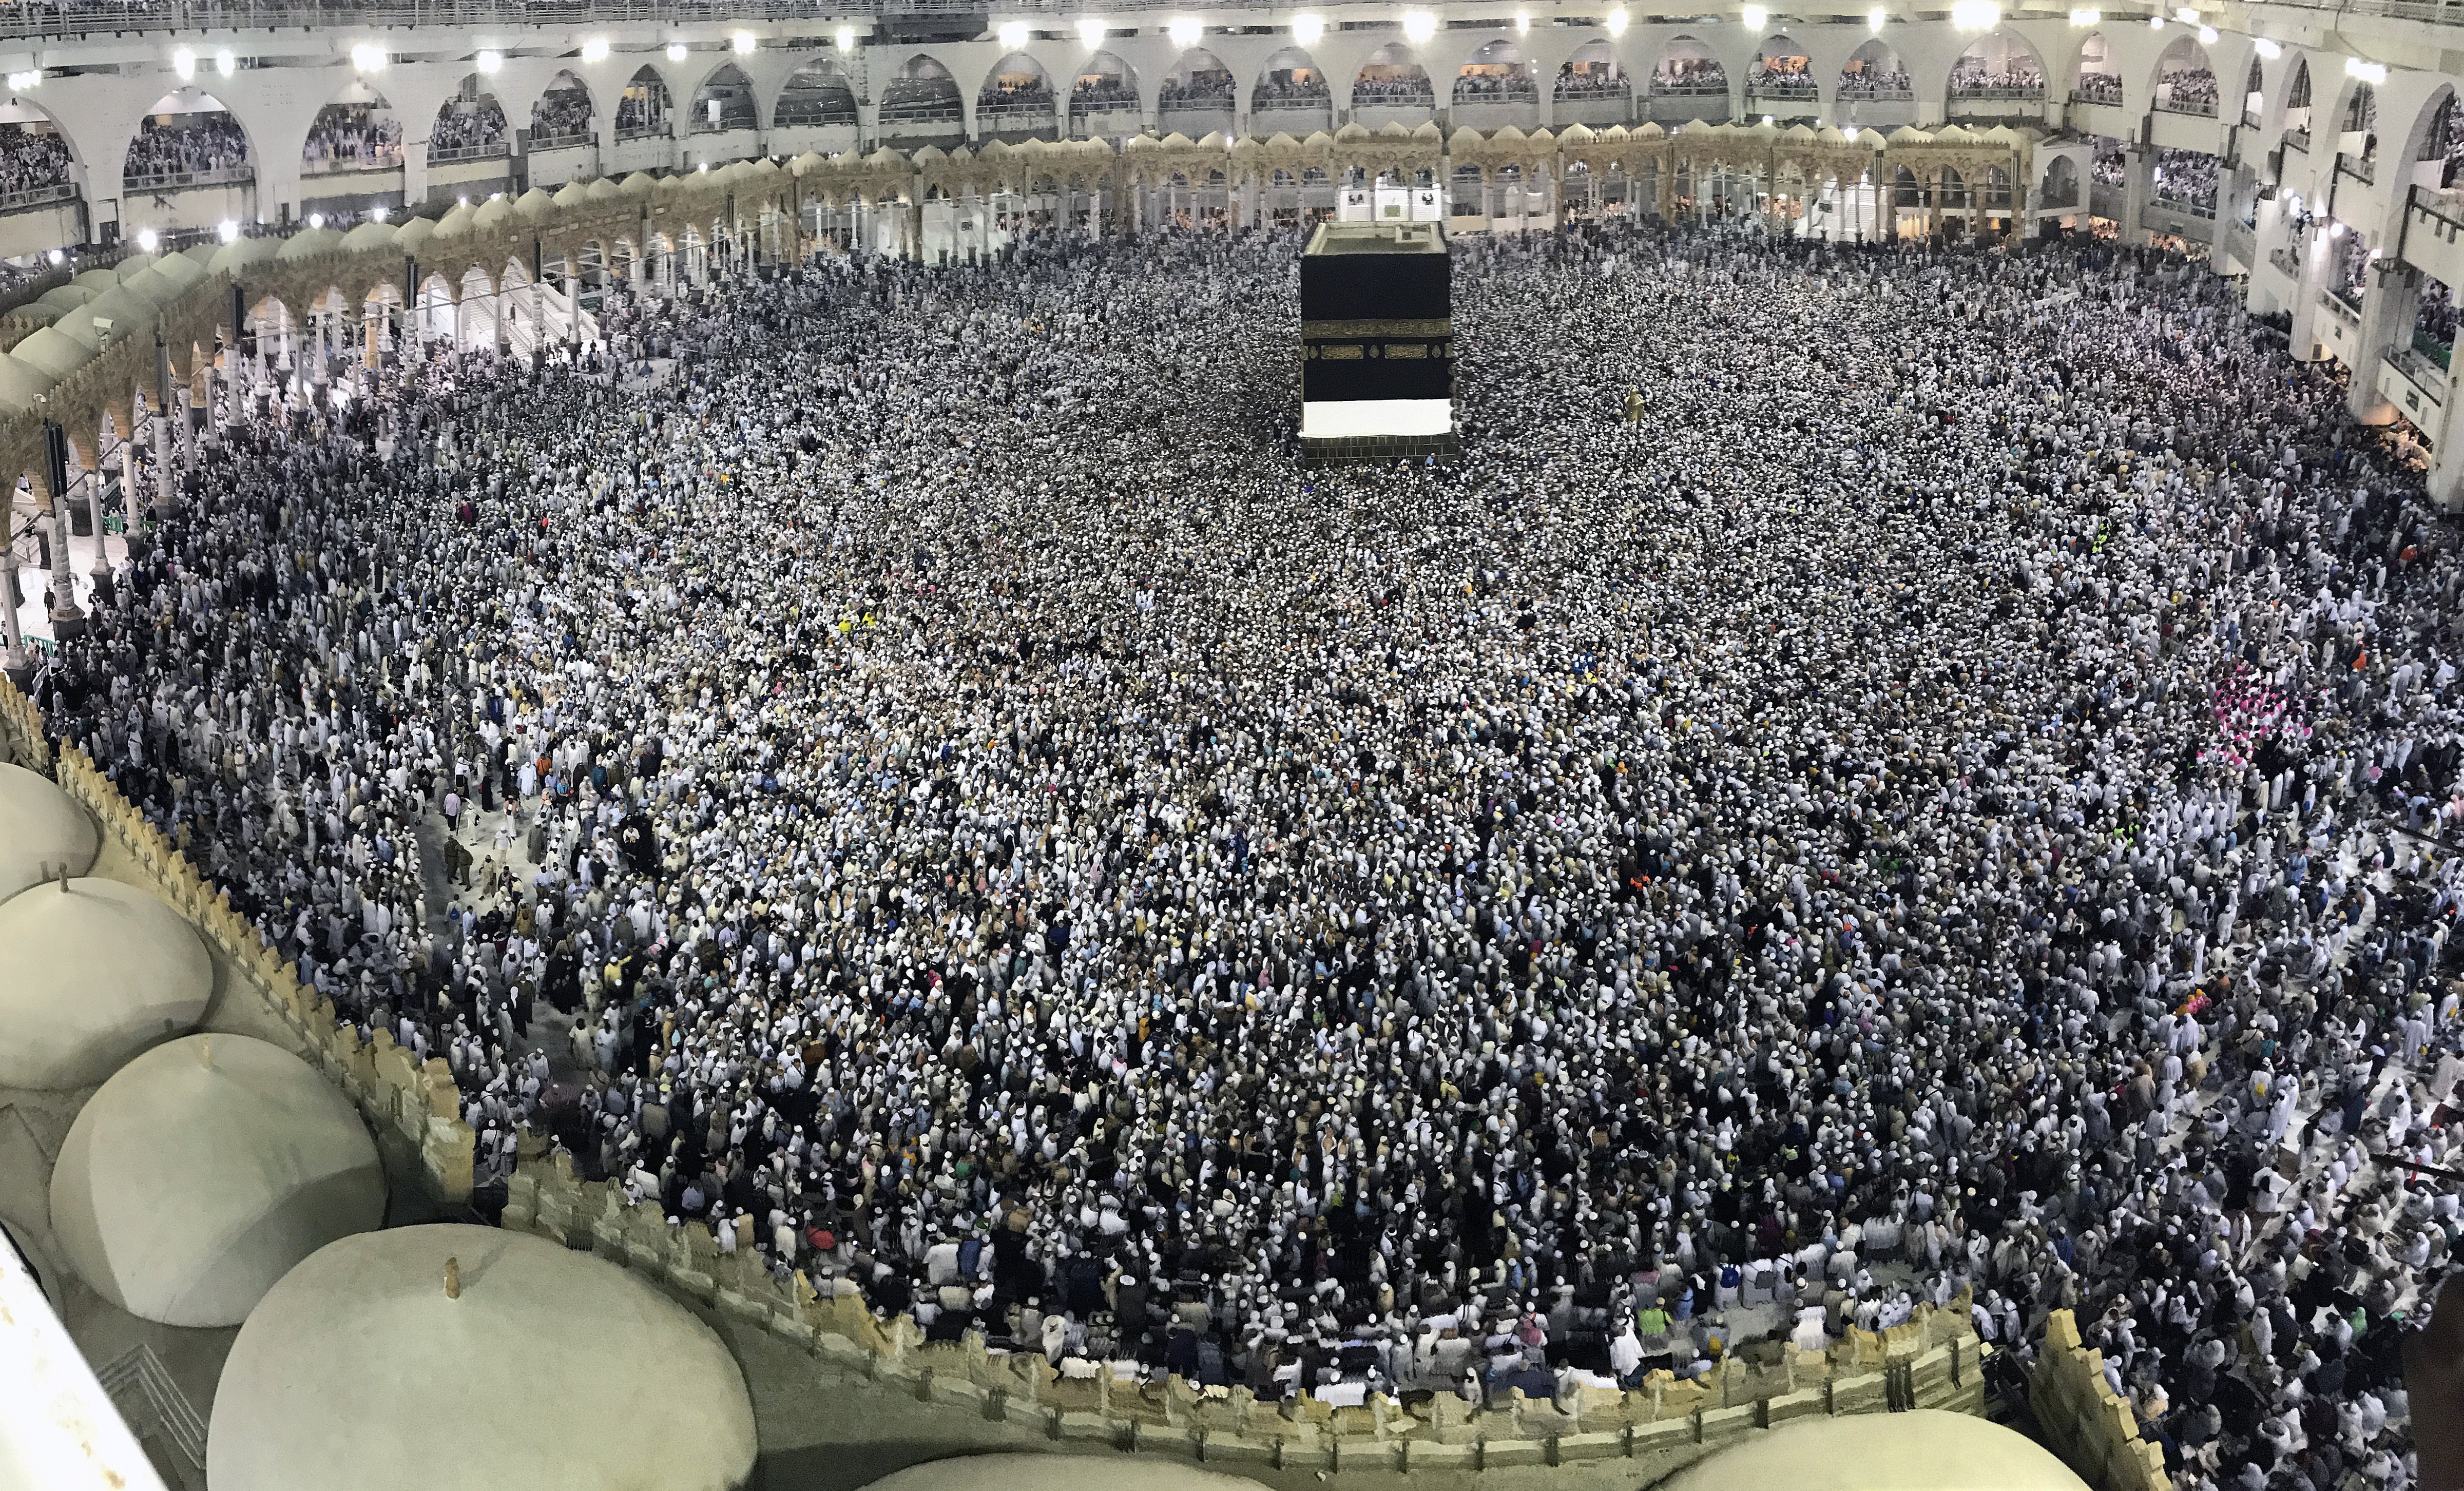 Hajj pilgrims circumambulate around the Kaaba, Islam's holiest site, located in the center of the Masjid al-Haram (Grand Mosque) in Mecca, Saudi Arabia on Aug. 22, 2017. (Firat Yurdakul—Anadolu Agency/Getty Images)